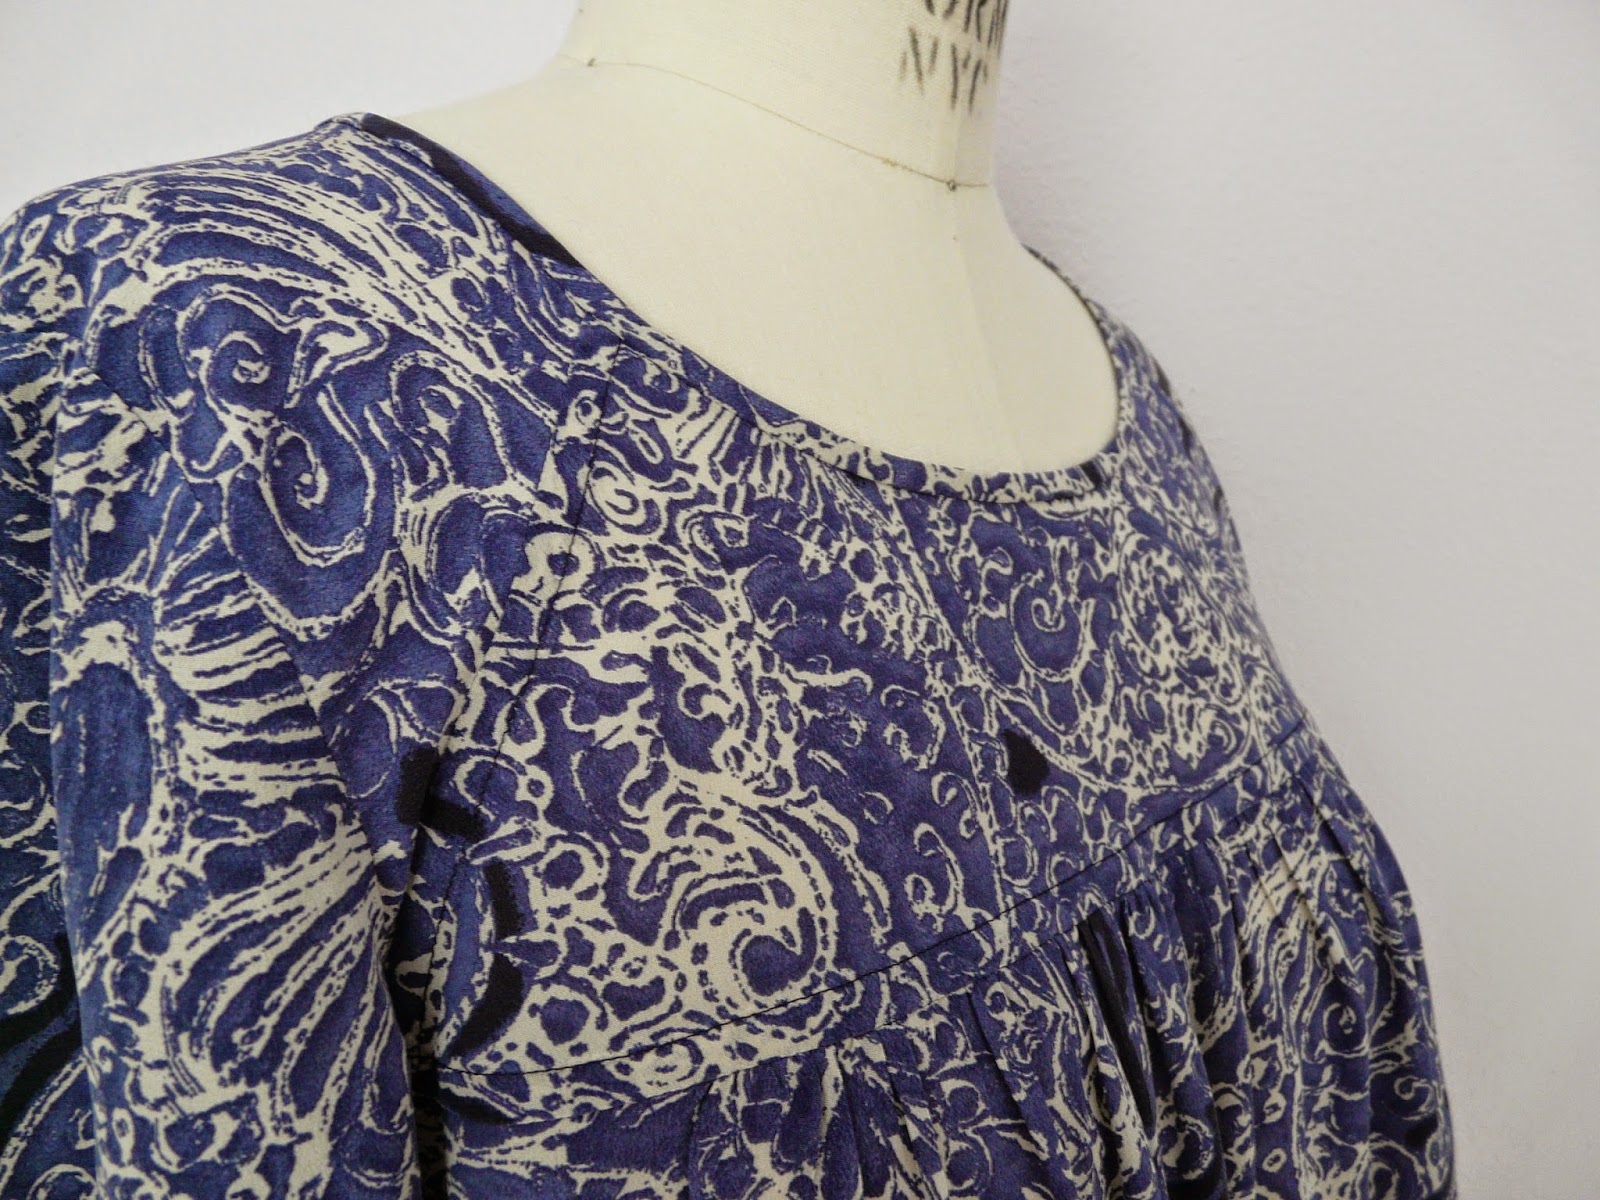 Amanda's Adventures in Sewing: Vogue 1367 - Blue silk crepe de chine blouse